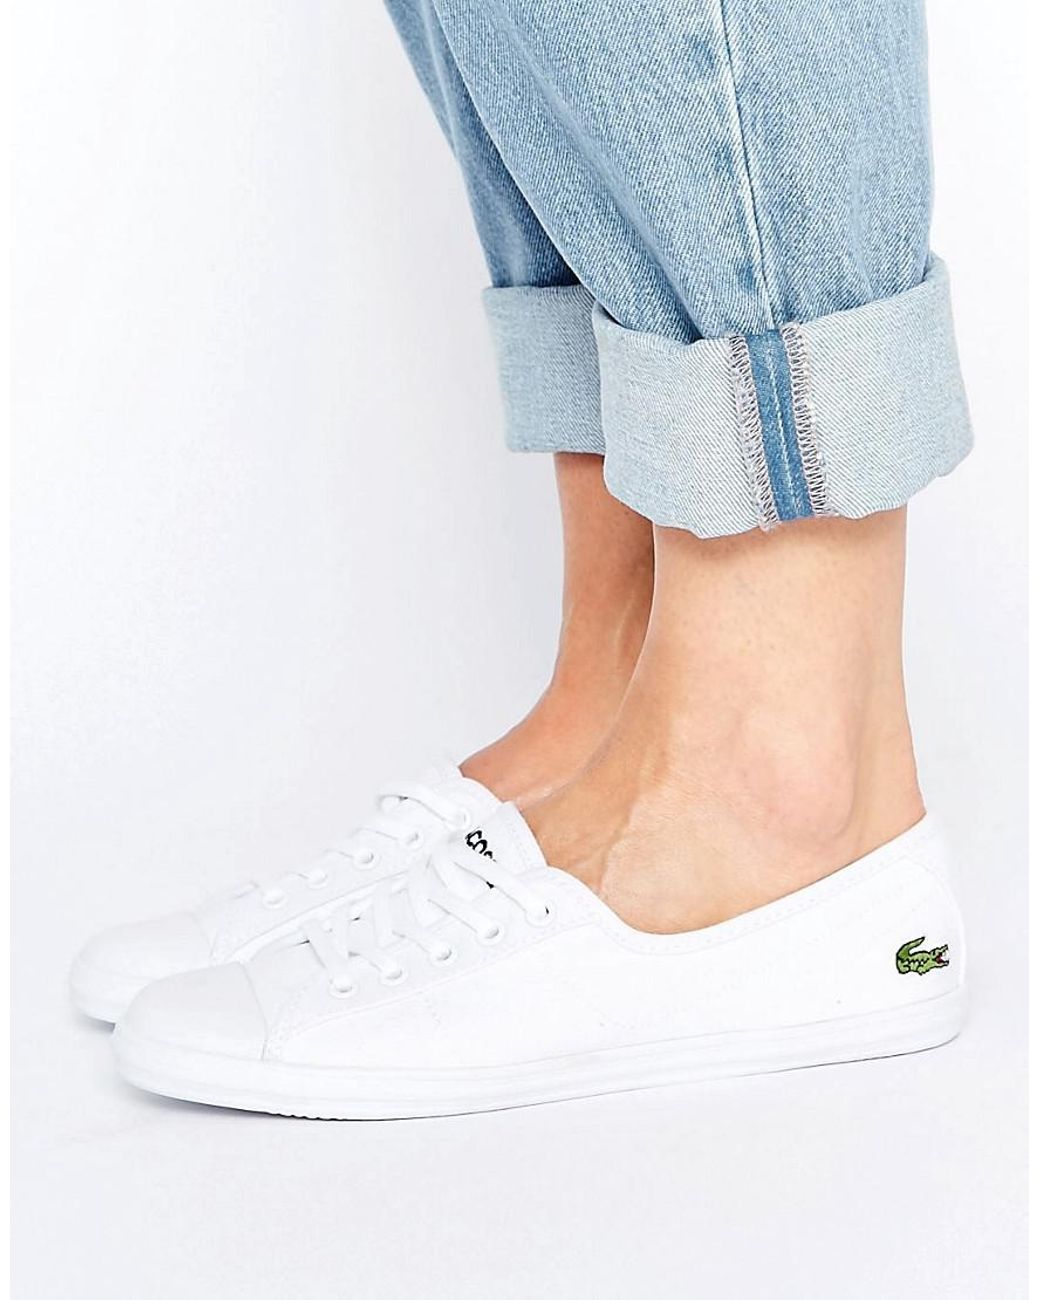 Lacoste L003 New Canvas Sneakers for Men - مبرق للأحذية